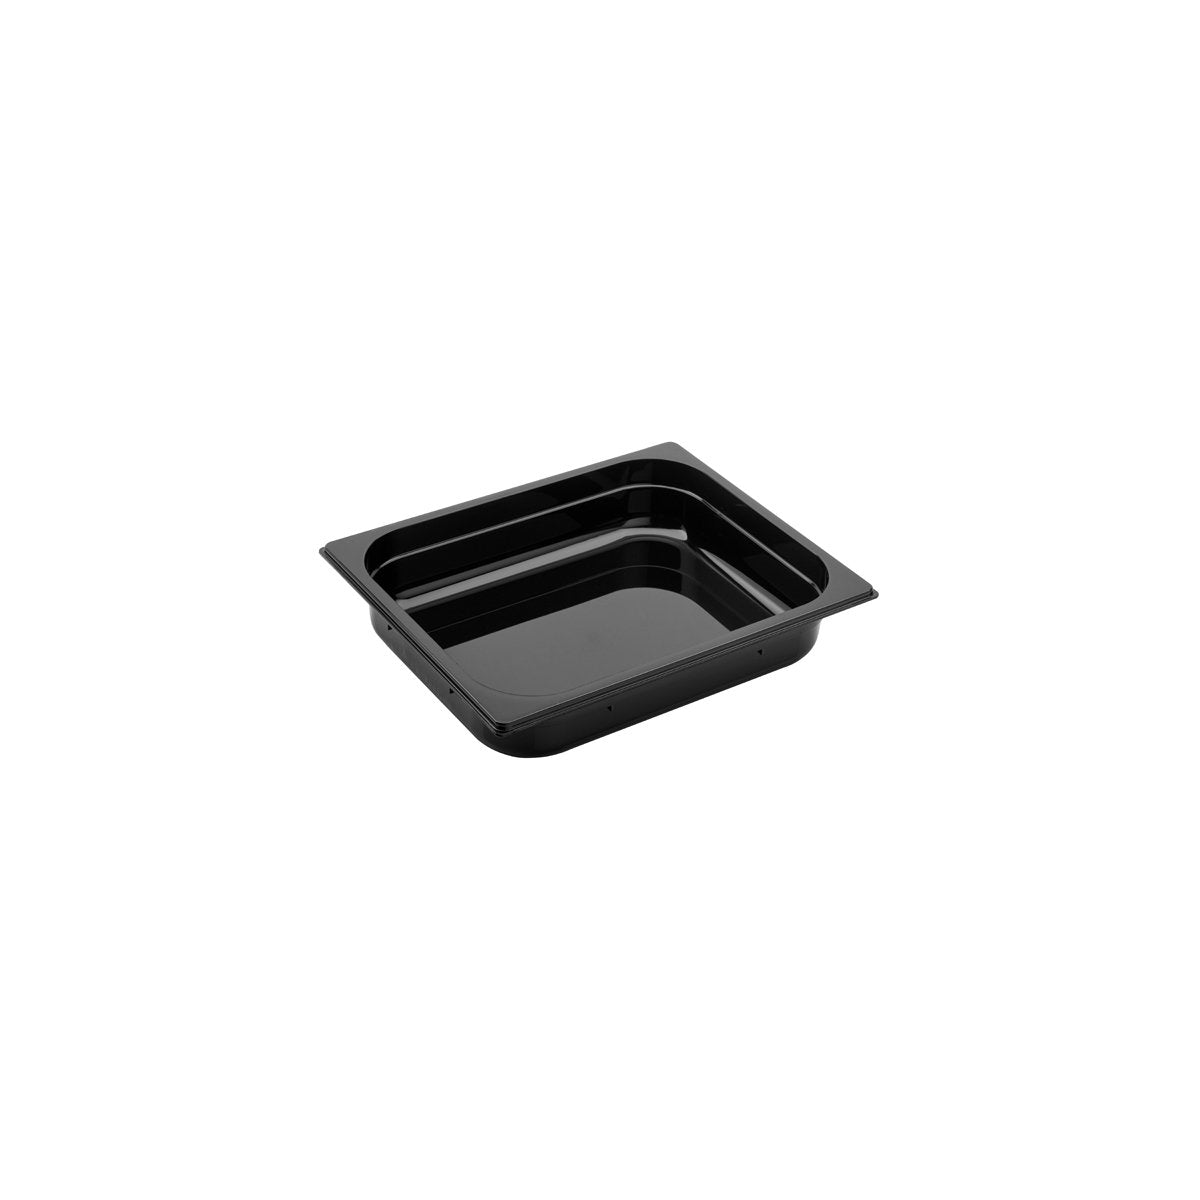 PC-12065BK Inox Macel Gastronorm Pan Polycarbonate Black 1/2 Size 65mm Tomkin Australia Hospitality Supplies